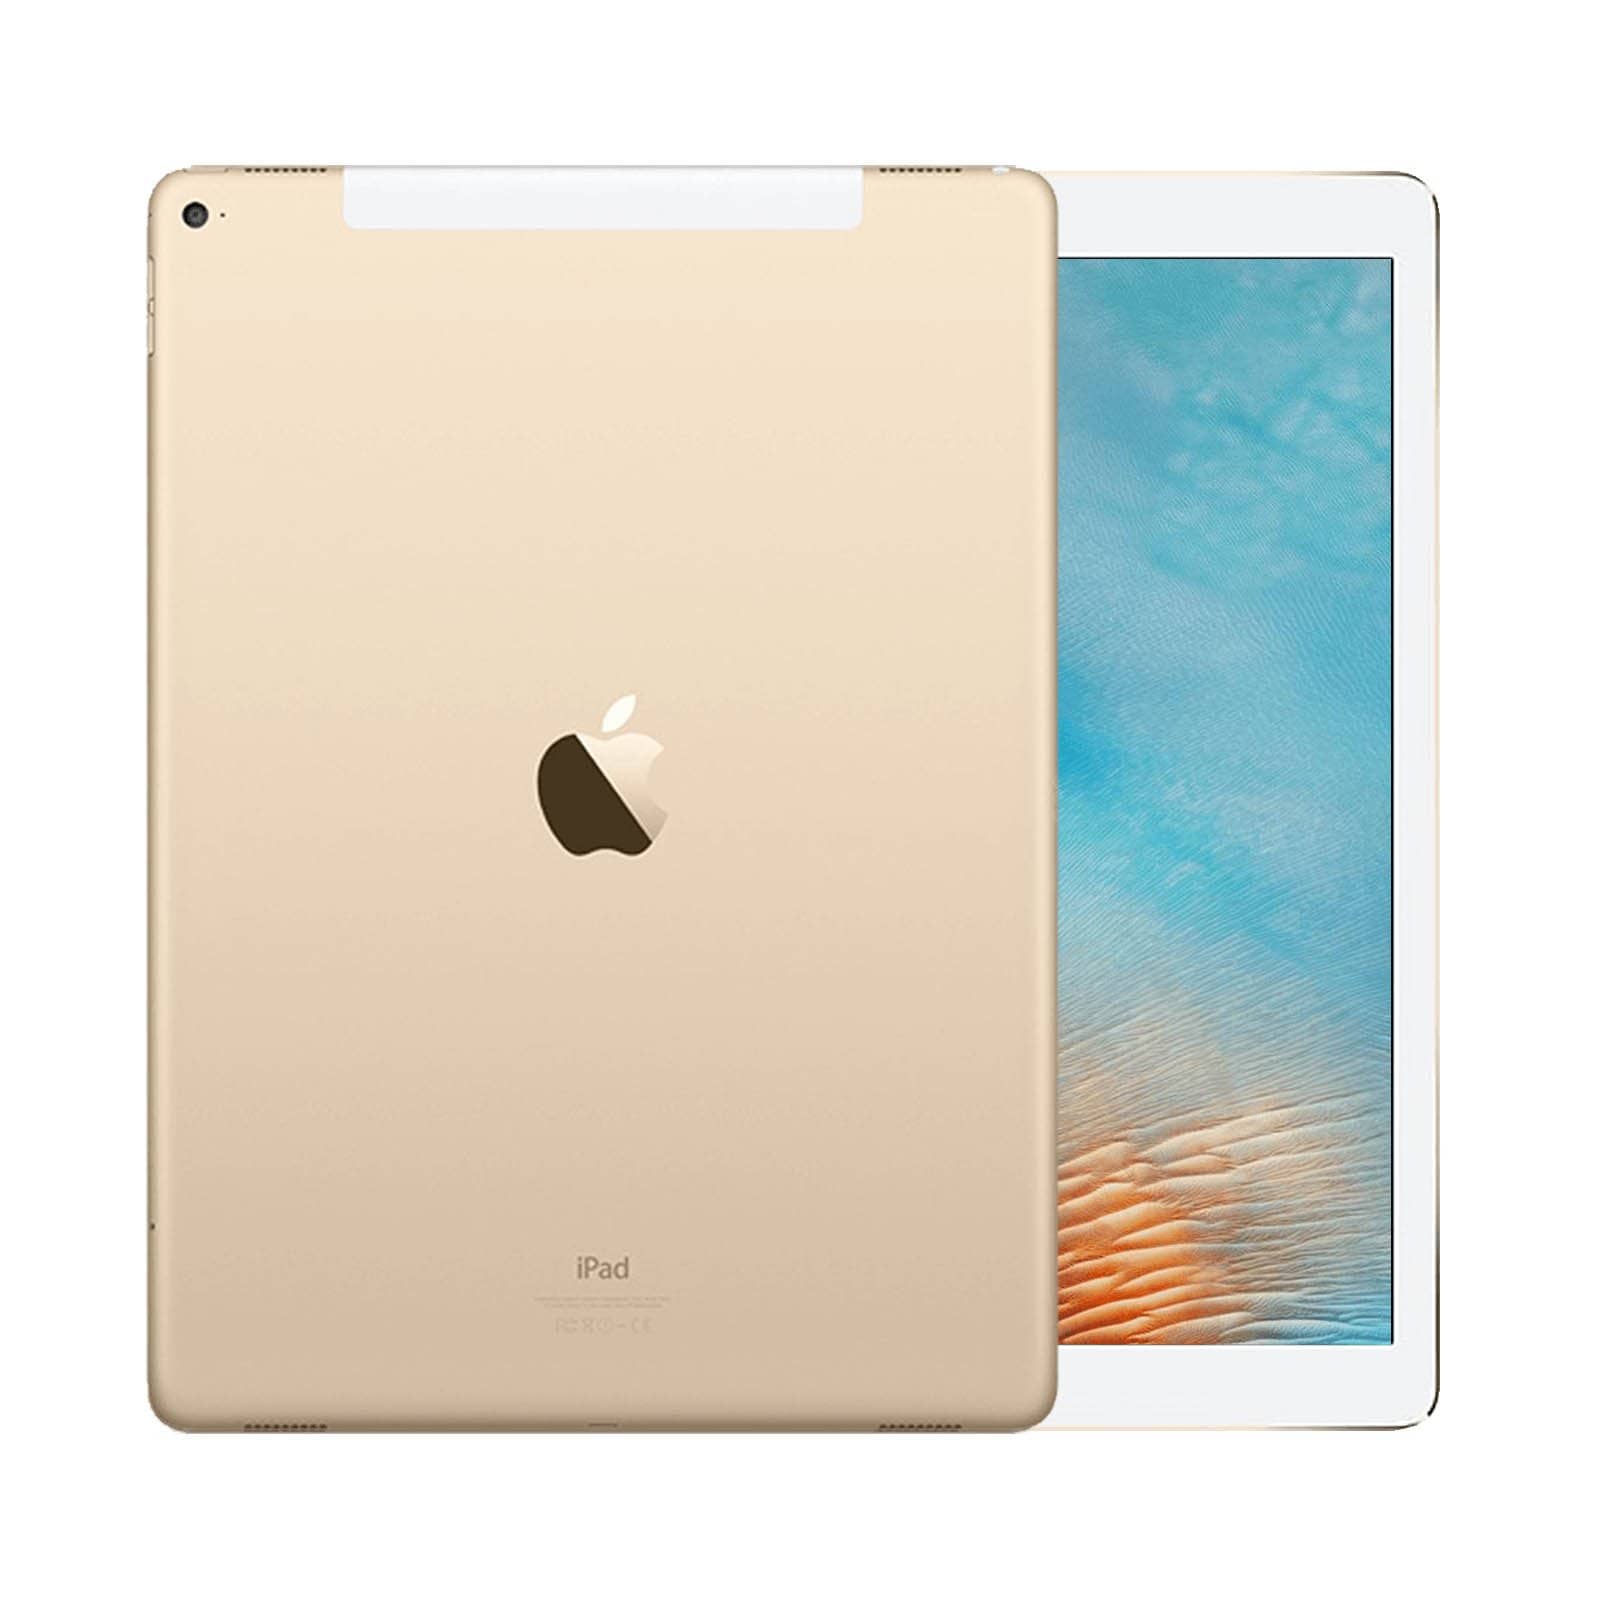 iPad Pro 12.9 Inch 2nd Gen 256GB Gold Pristine - WiFi 256GB Gold Pristine